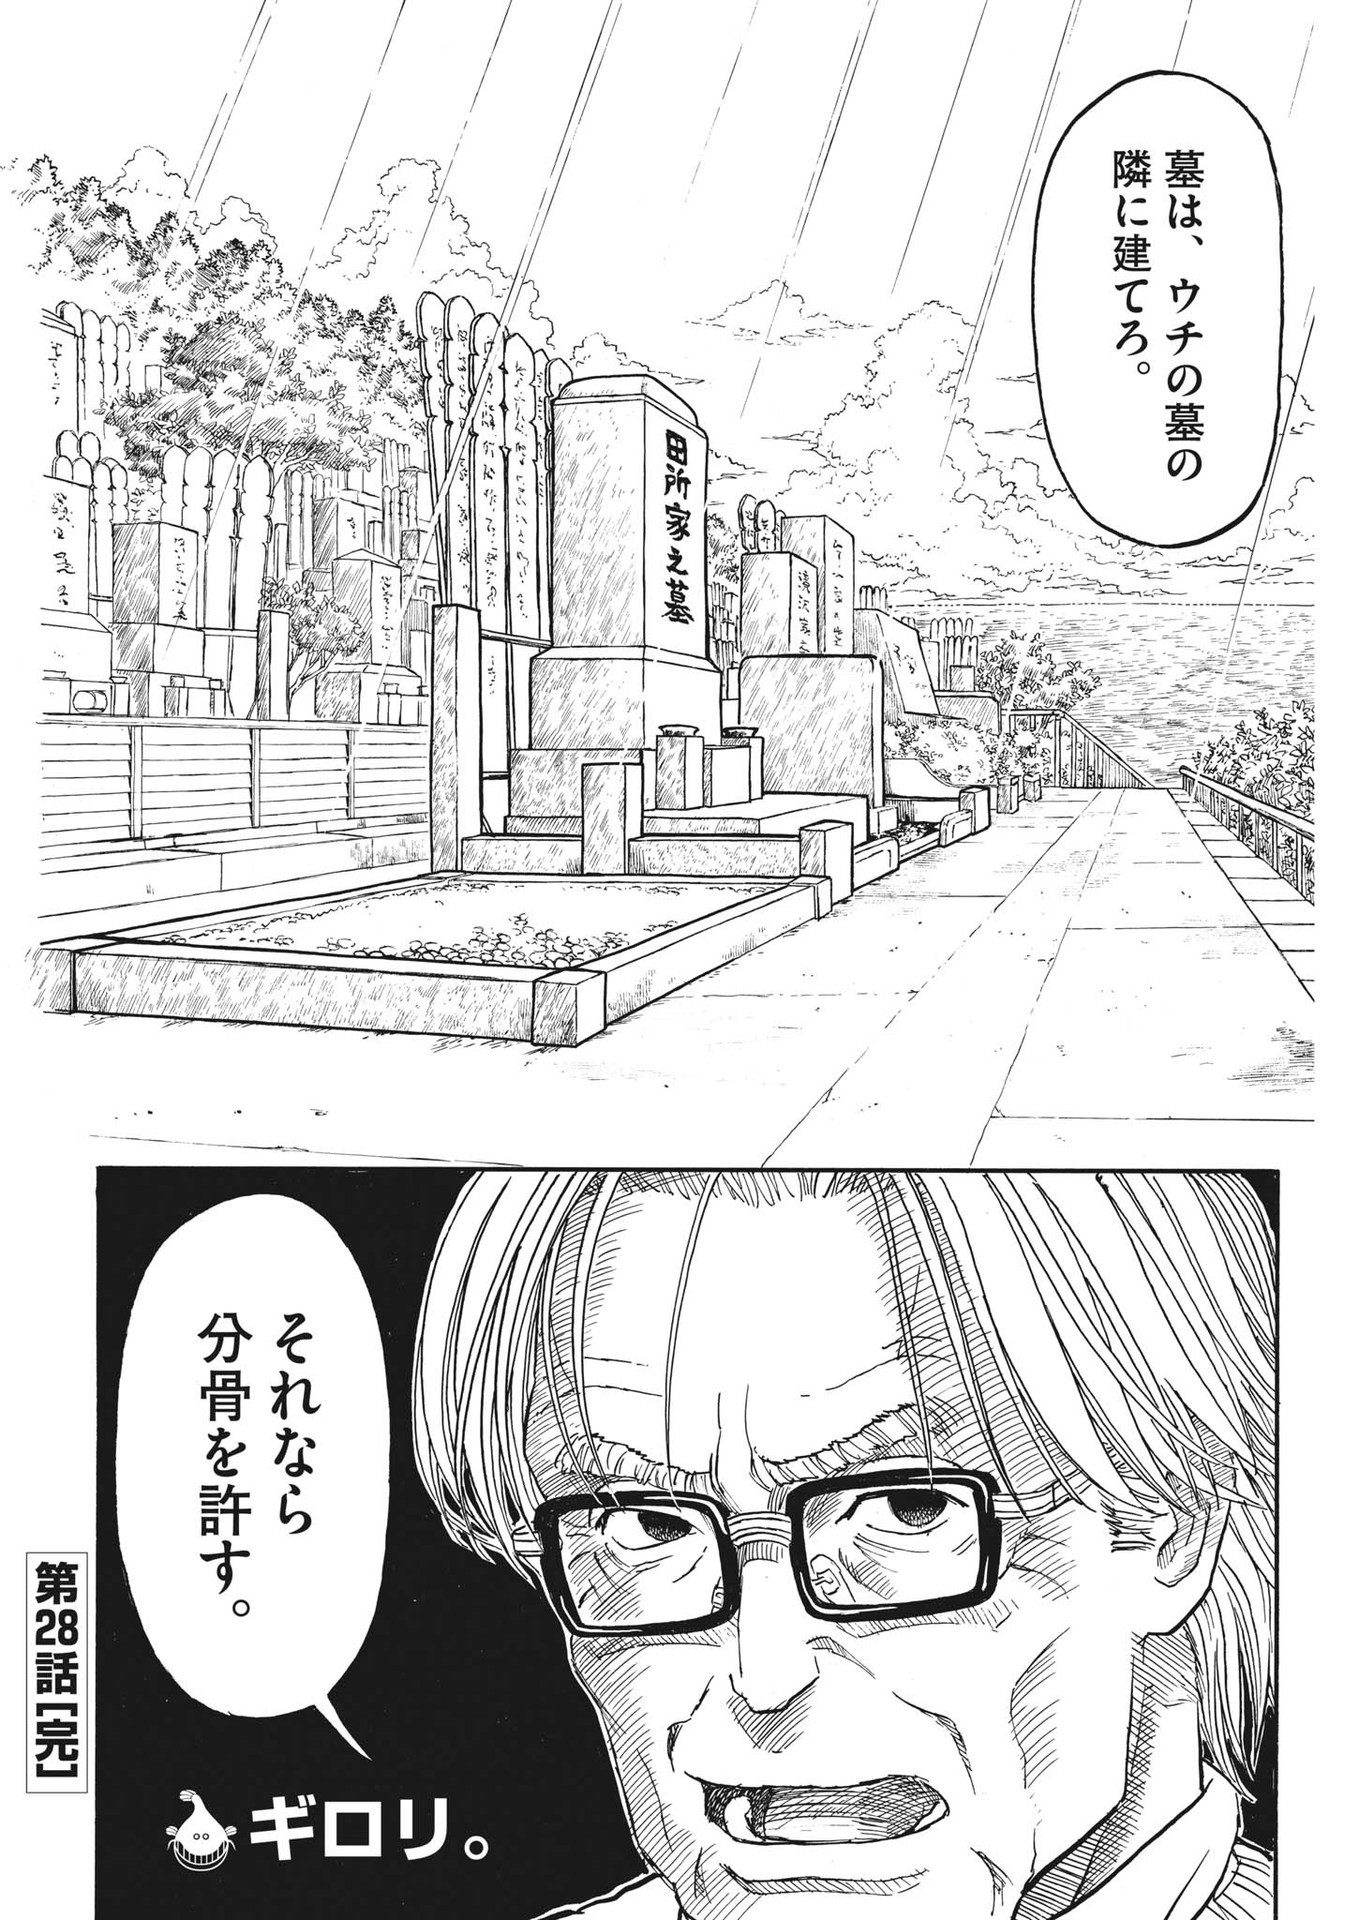 Komegura Fuufu no Recipe-chou - Chapter 28 - Page 20